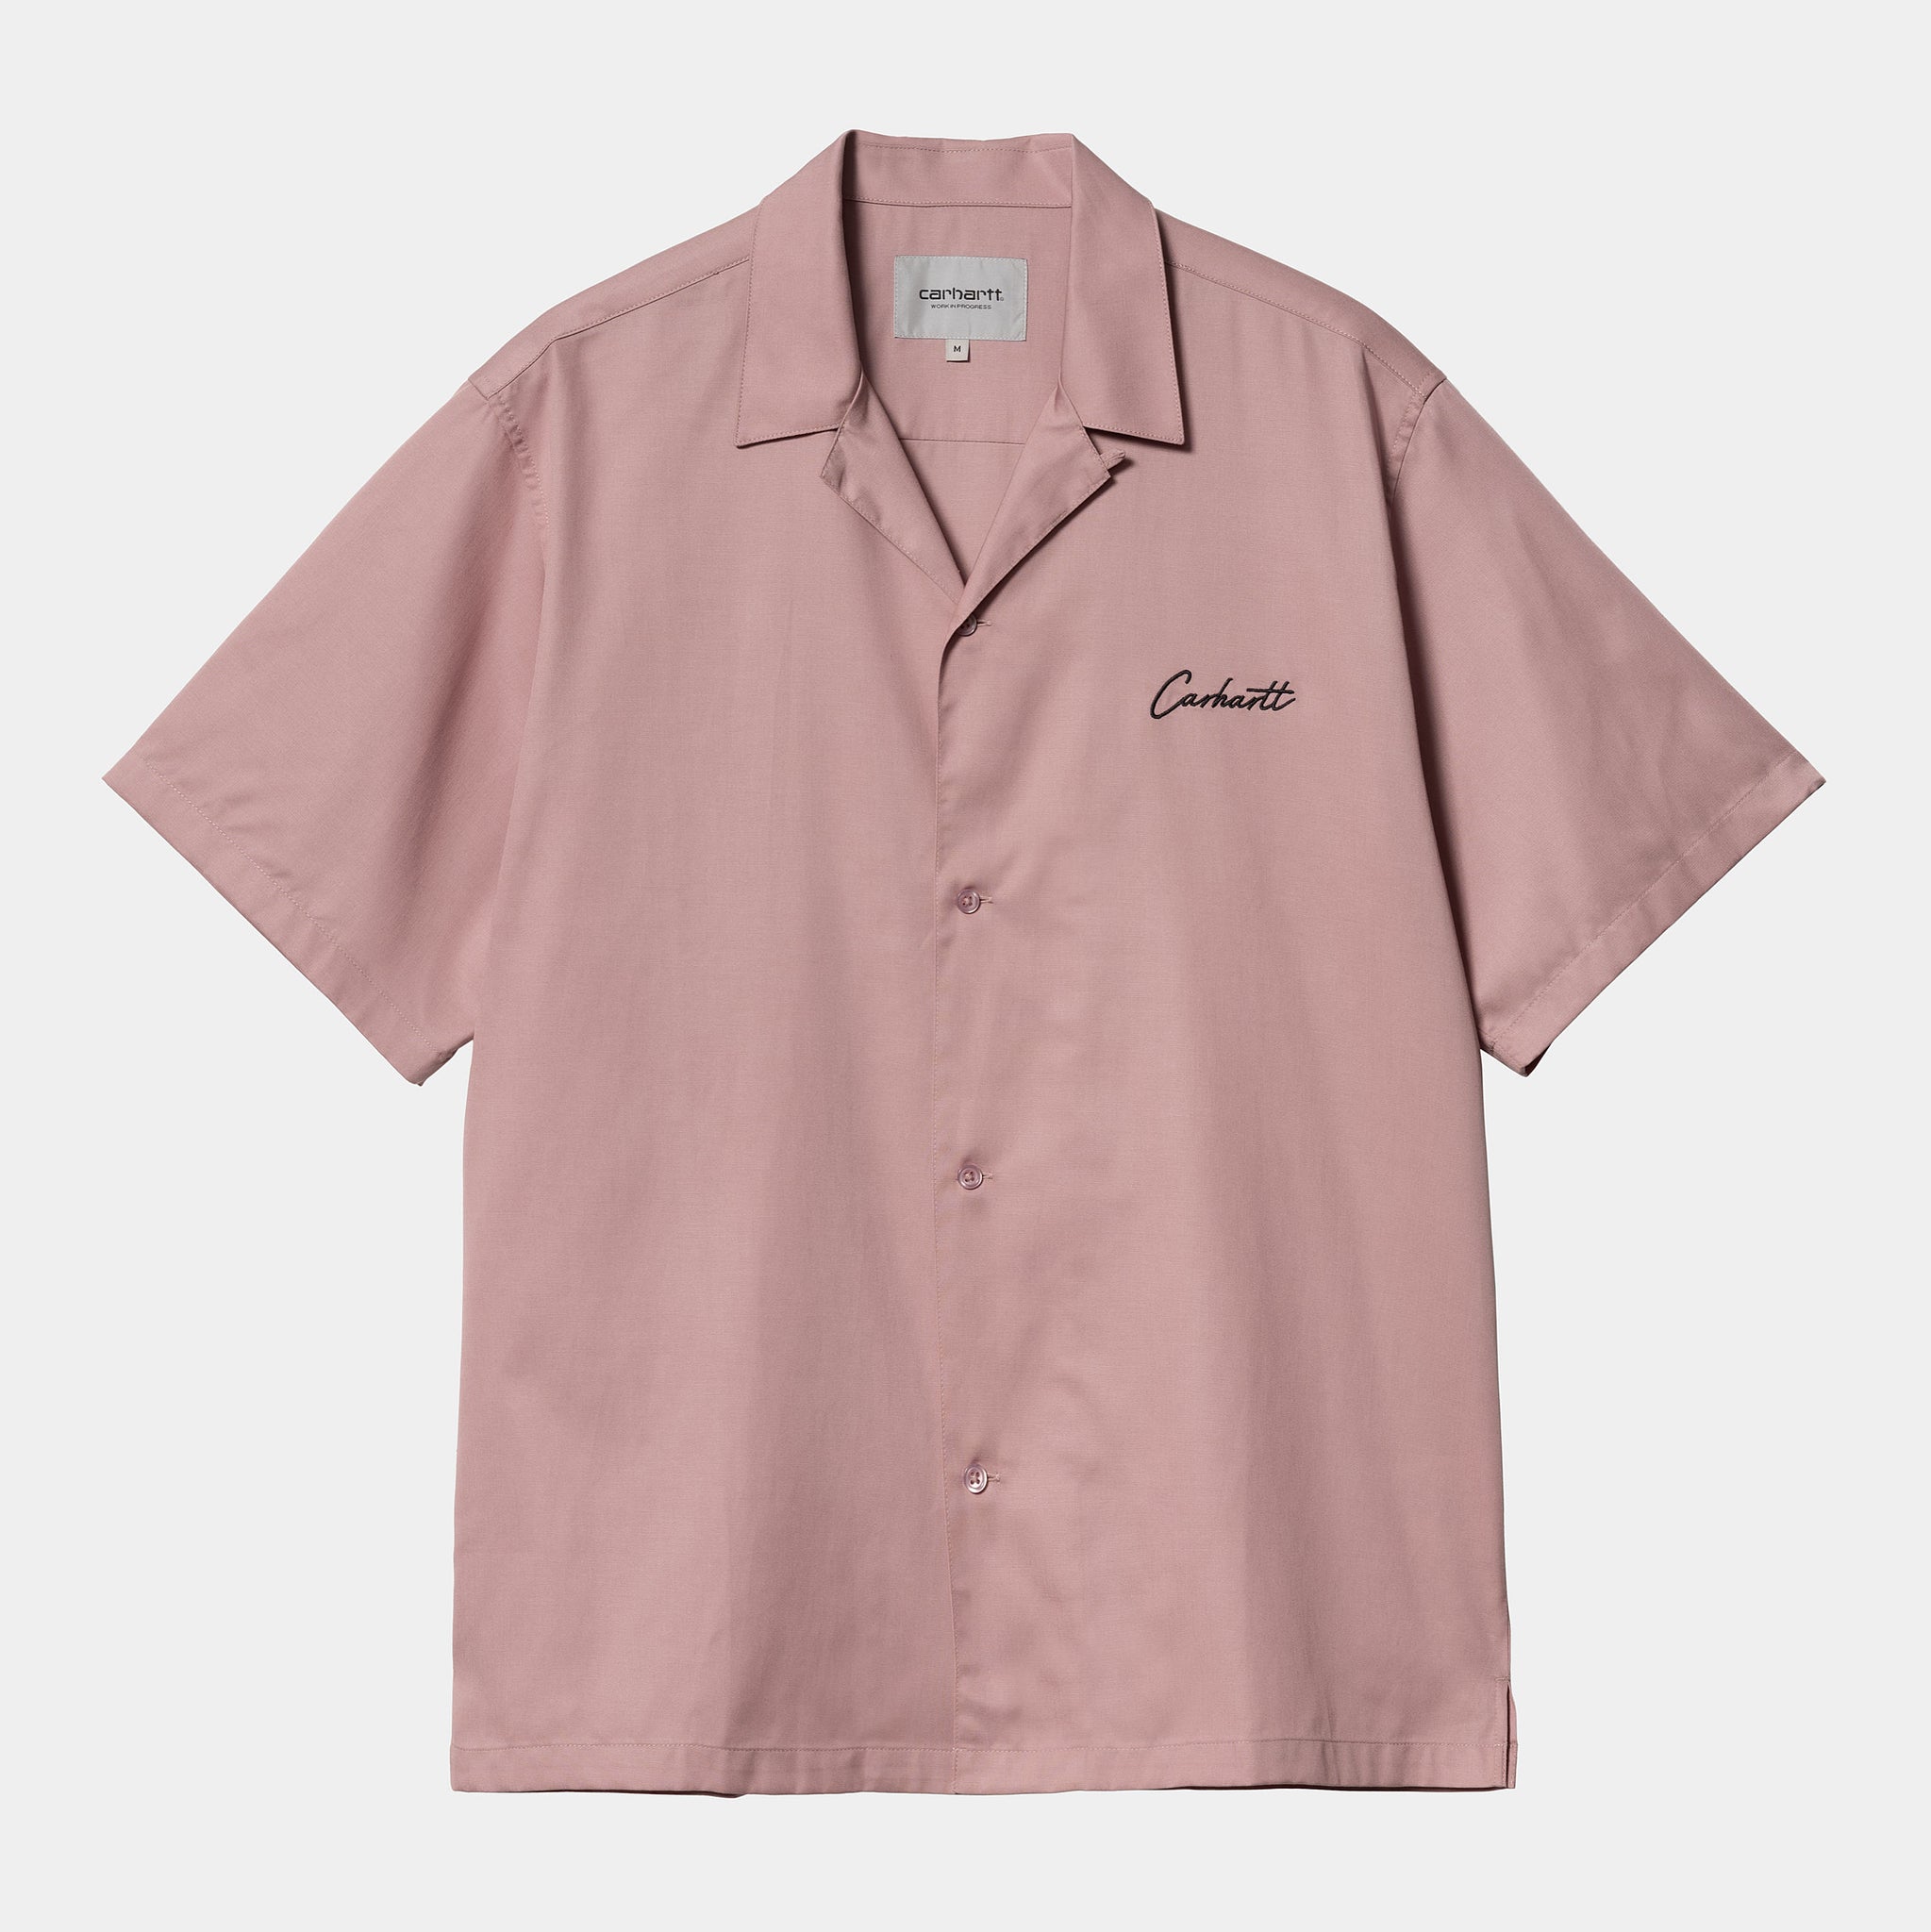 Carhartt S/S Delray Shirt - Glassy Pink/Black